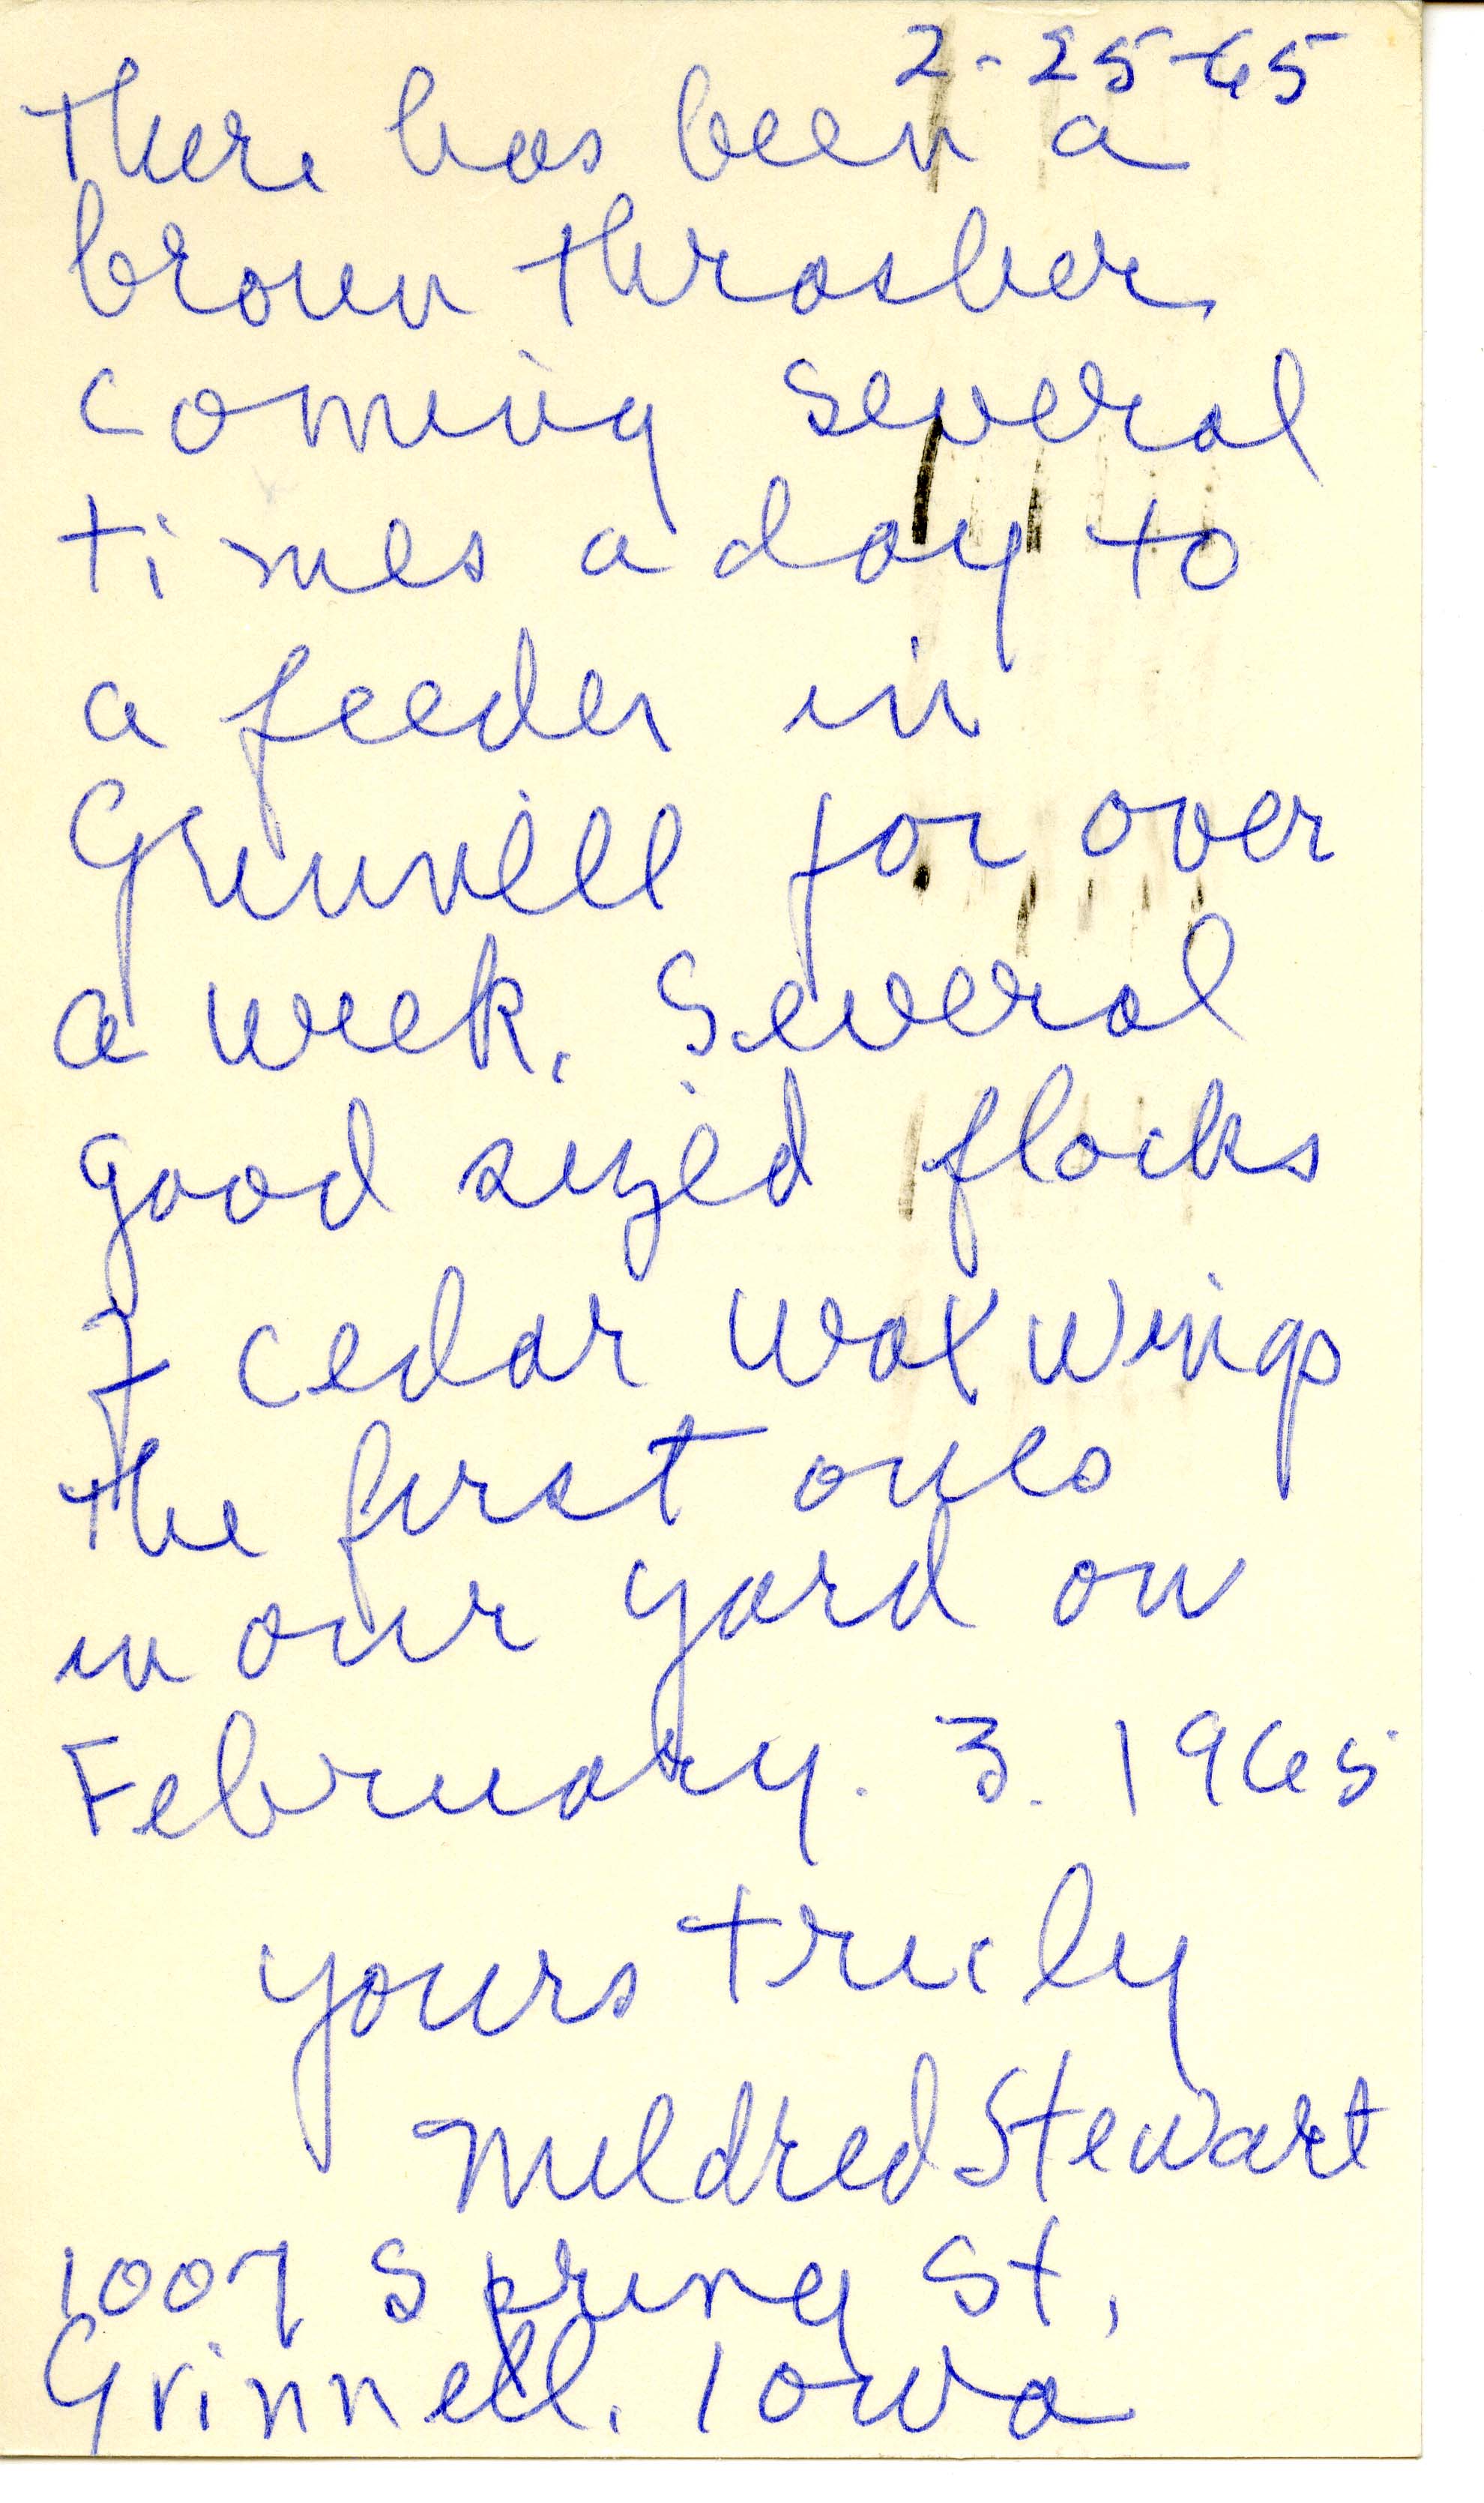 Mildred Stewart post card to Peter C. Petersen regarding the bird sightings in Grinnell, Iowa, February  25, 1965